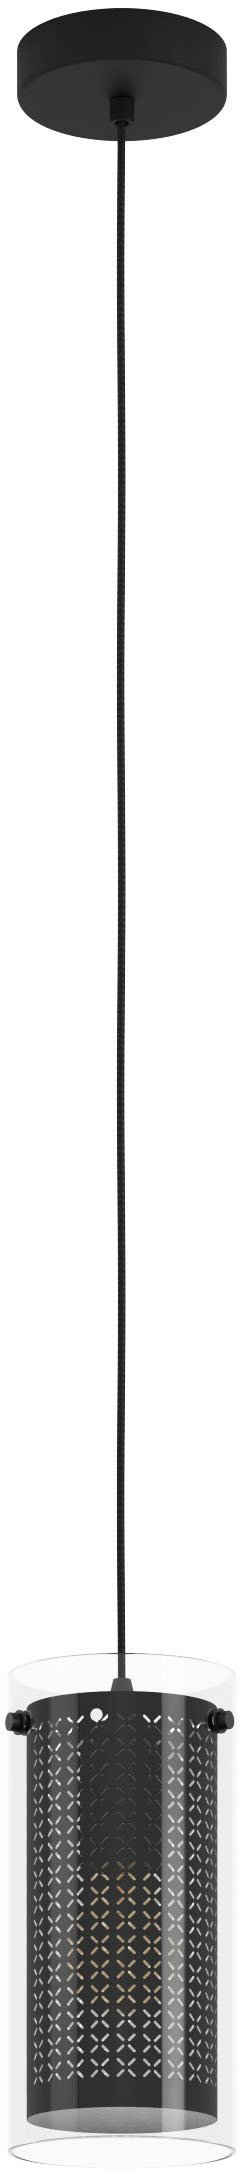 EGLO Hängeleuchte PINTO TEXTIL 1, Leuchtmittel wechselbar, ohne Leuchtmittel, Hängeleuchte in schwarz aus Stahl - exkl. E27 - 1X10W